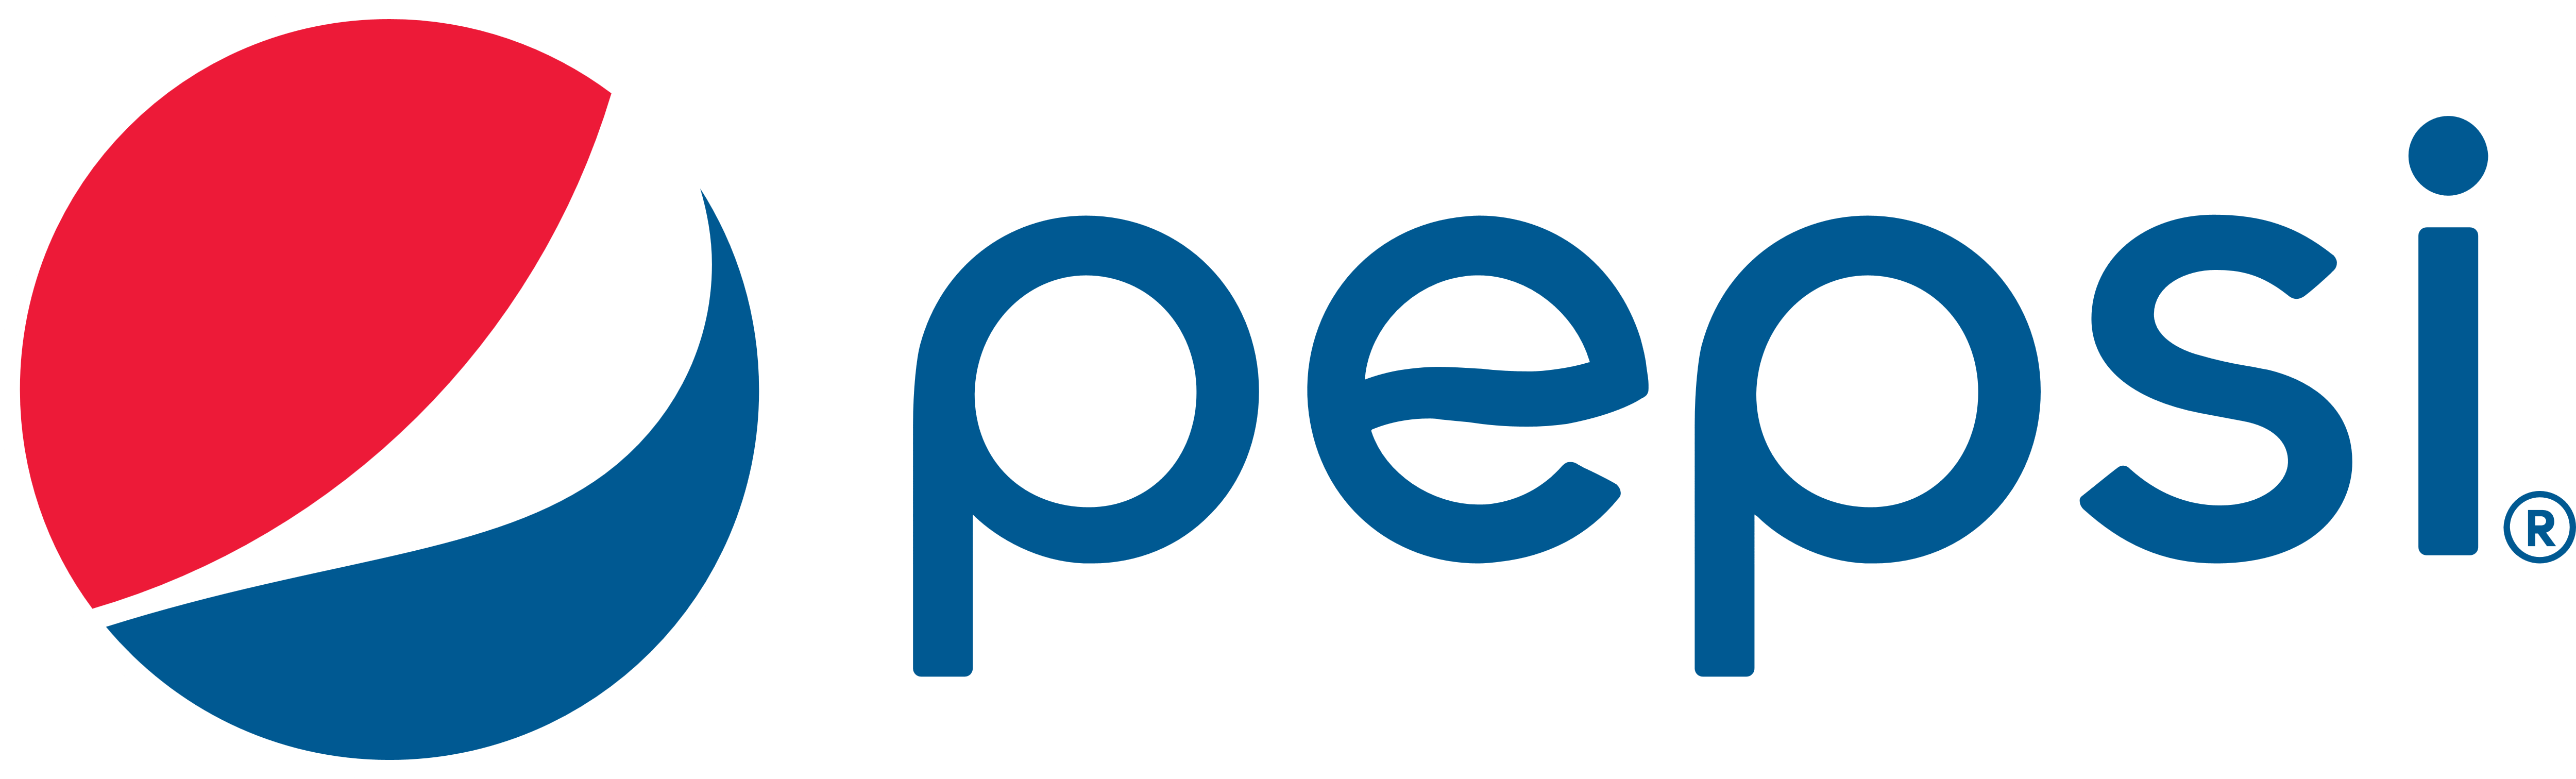 Pepci Logo - Pepsi